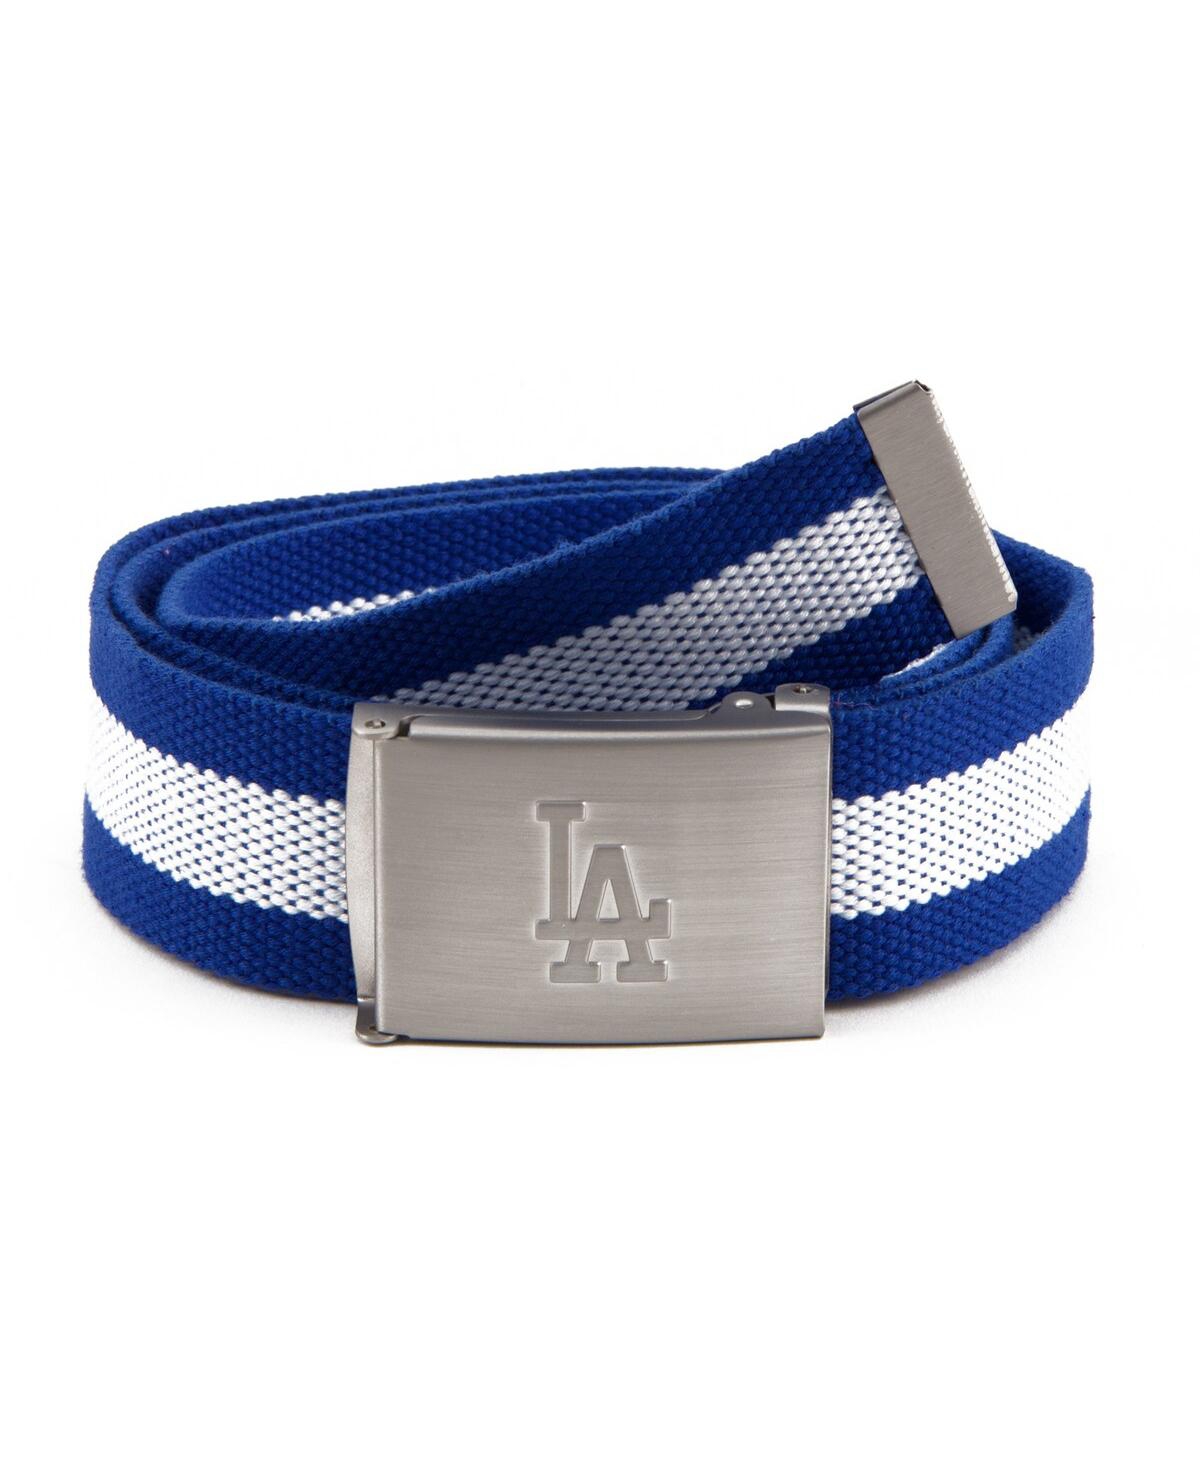 Eagles Wings Men's Los Angeles Dodgers Fabric Belt In Blue,white